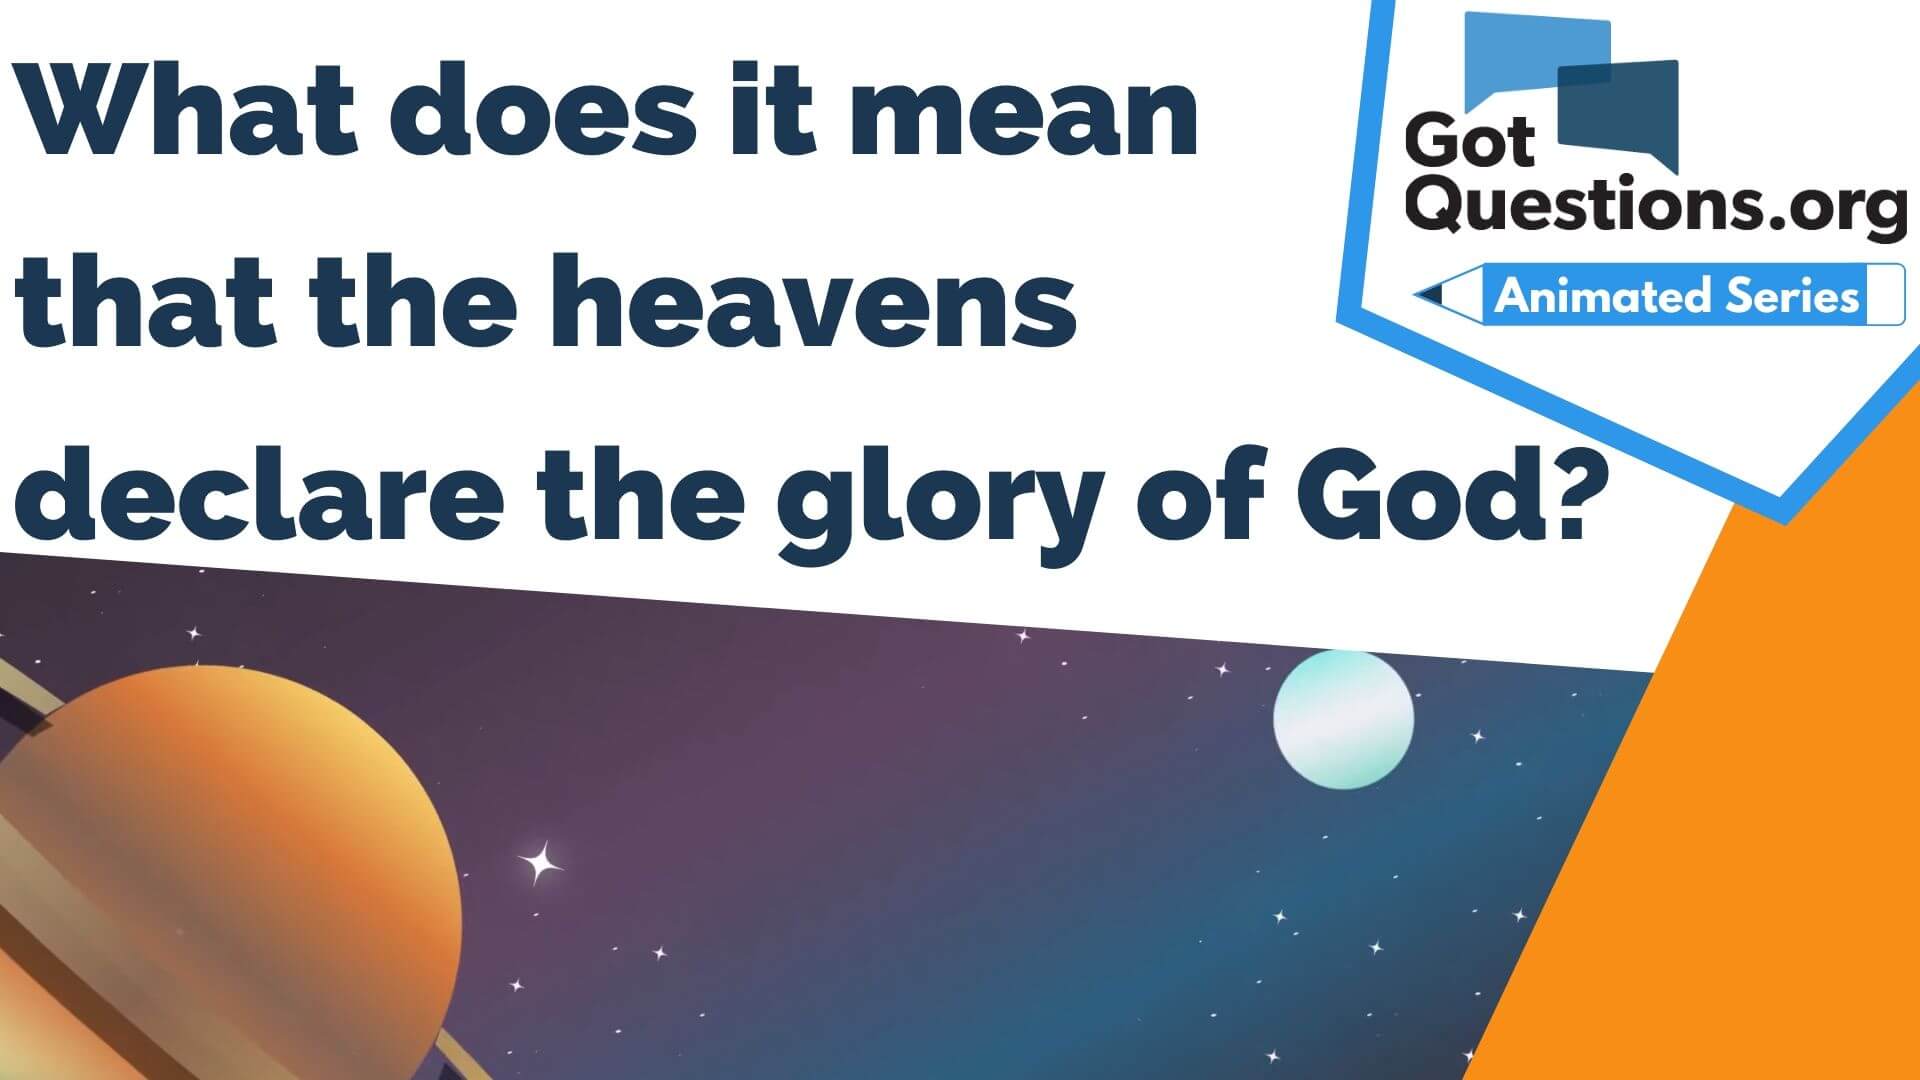 Heavens proclaim the glory of God: countless stars